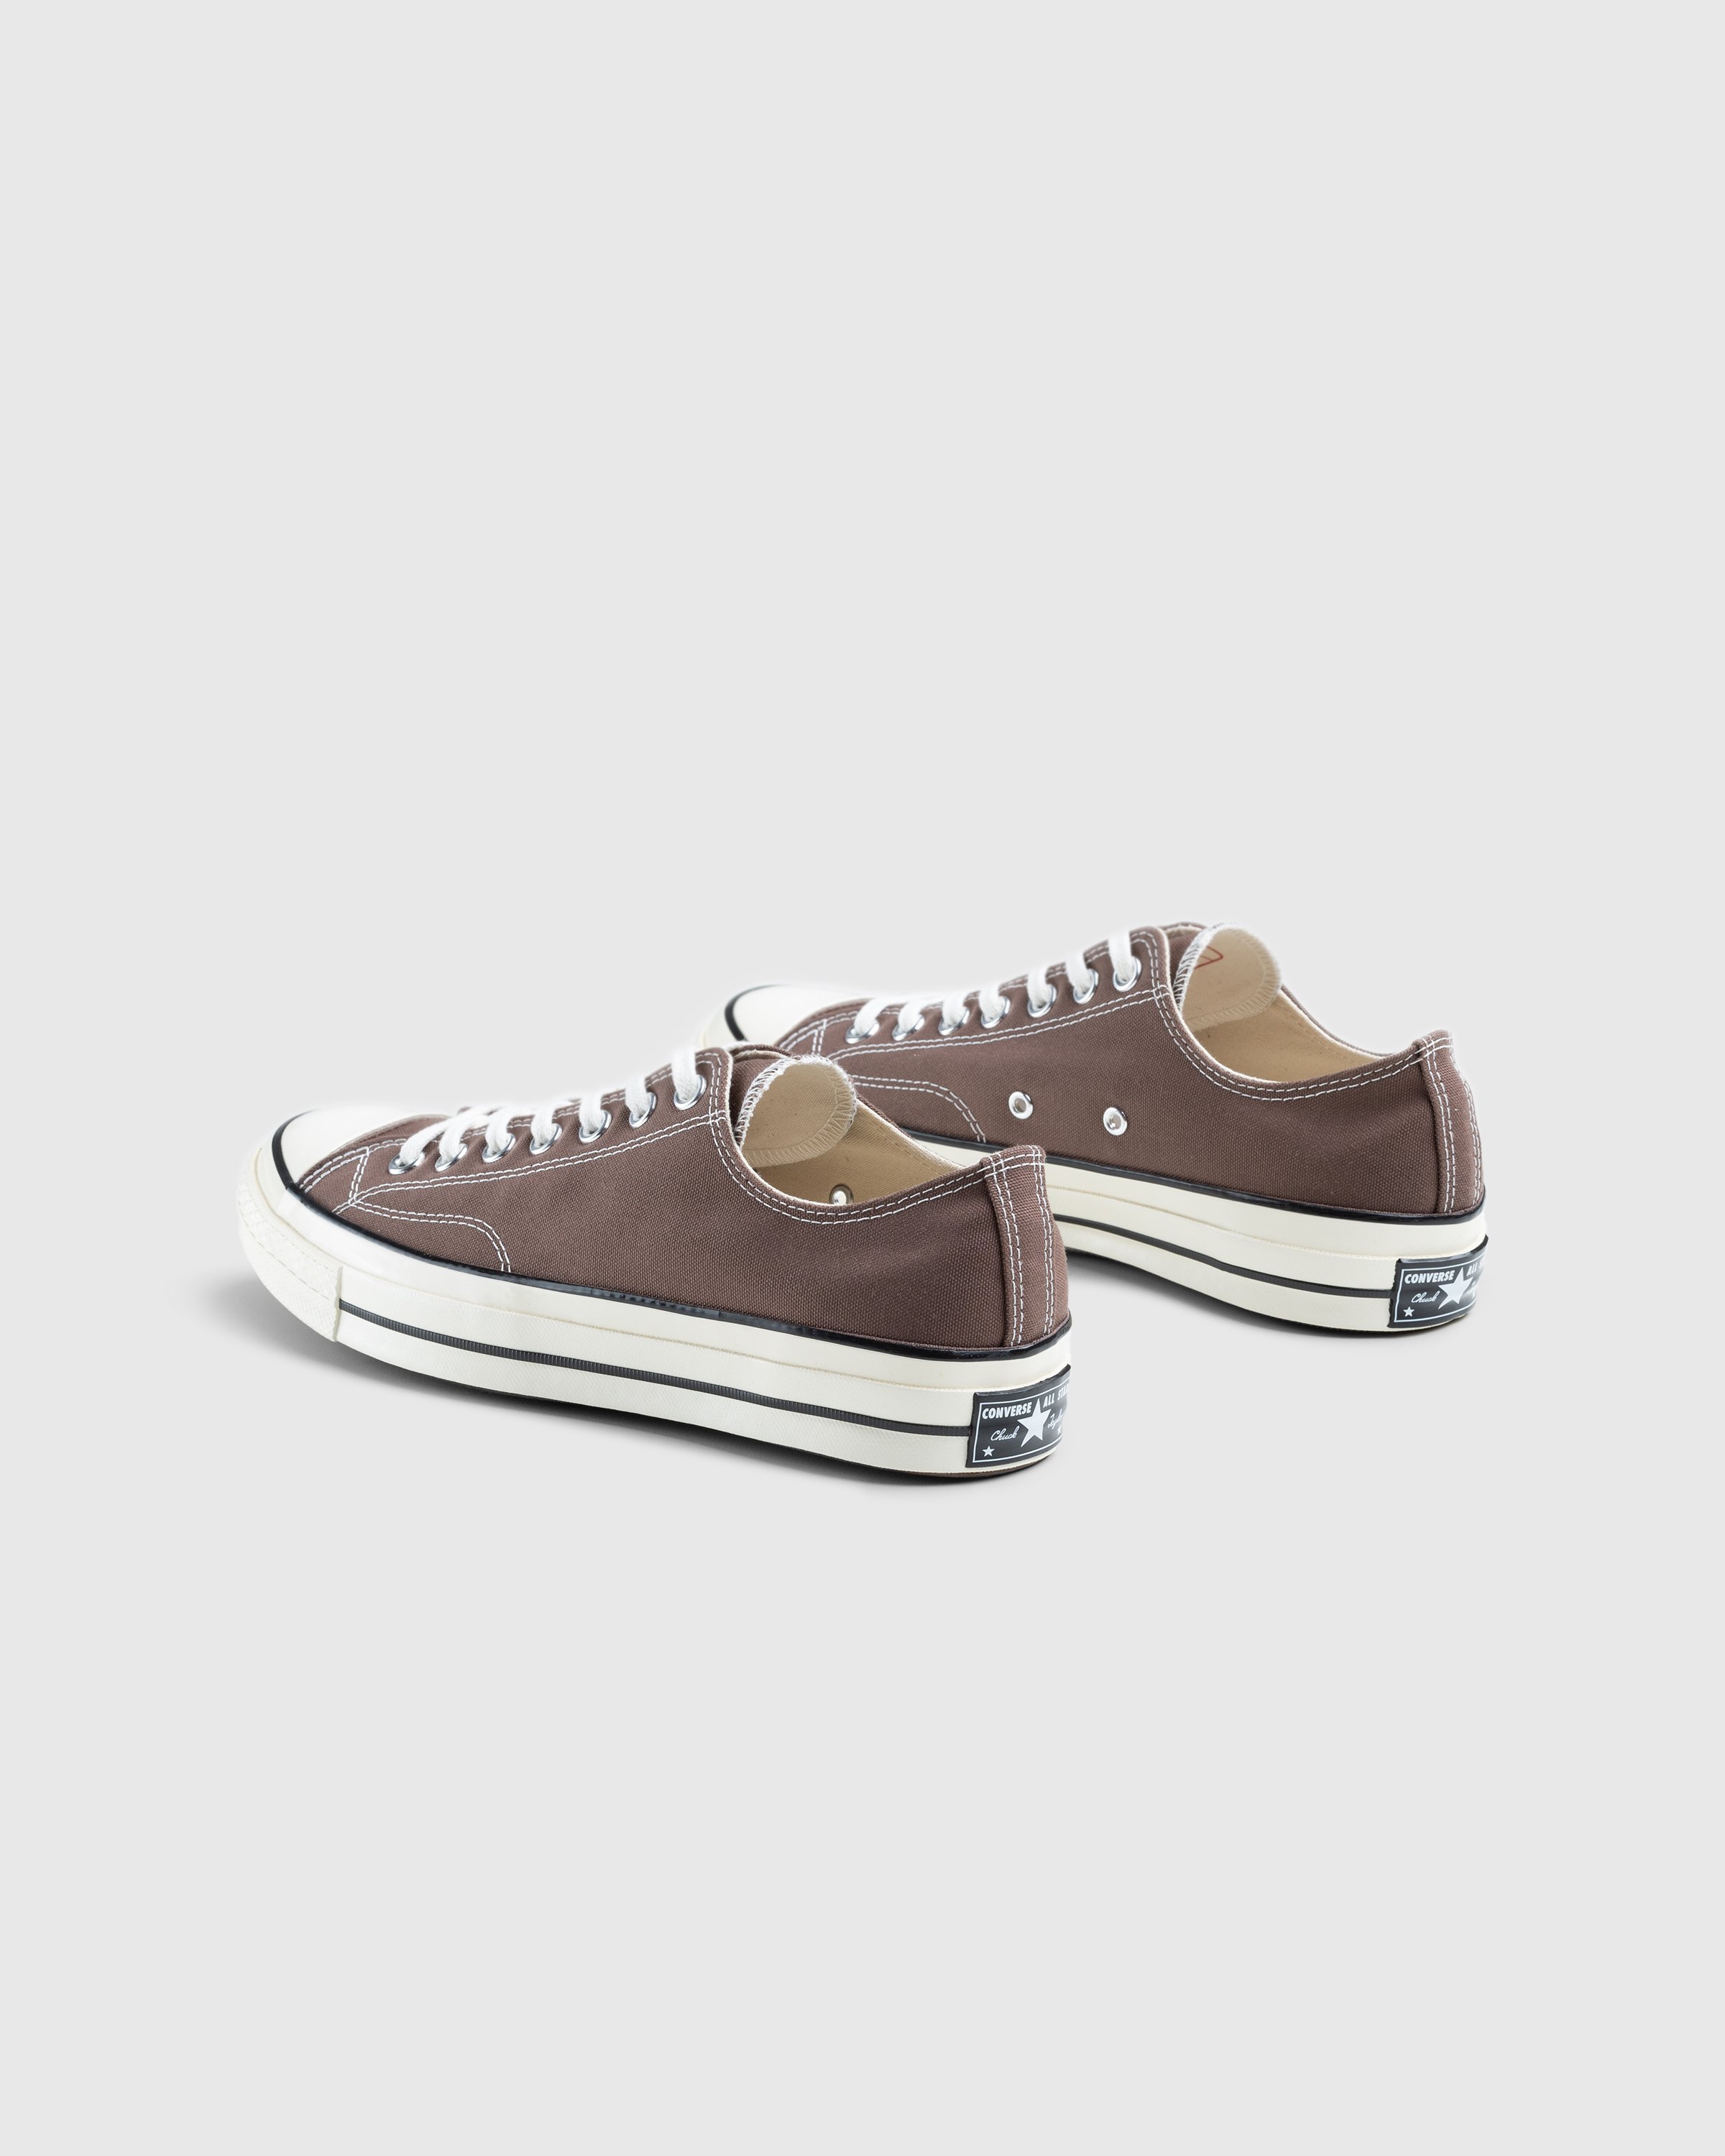 Converse - Chuck 70 Ox Squirrel Friend/Egret/Black - Footwear - Brown - Image 4